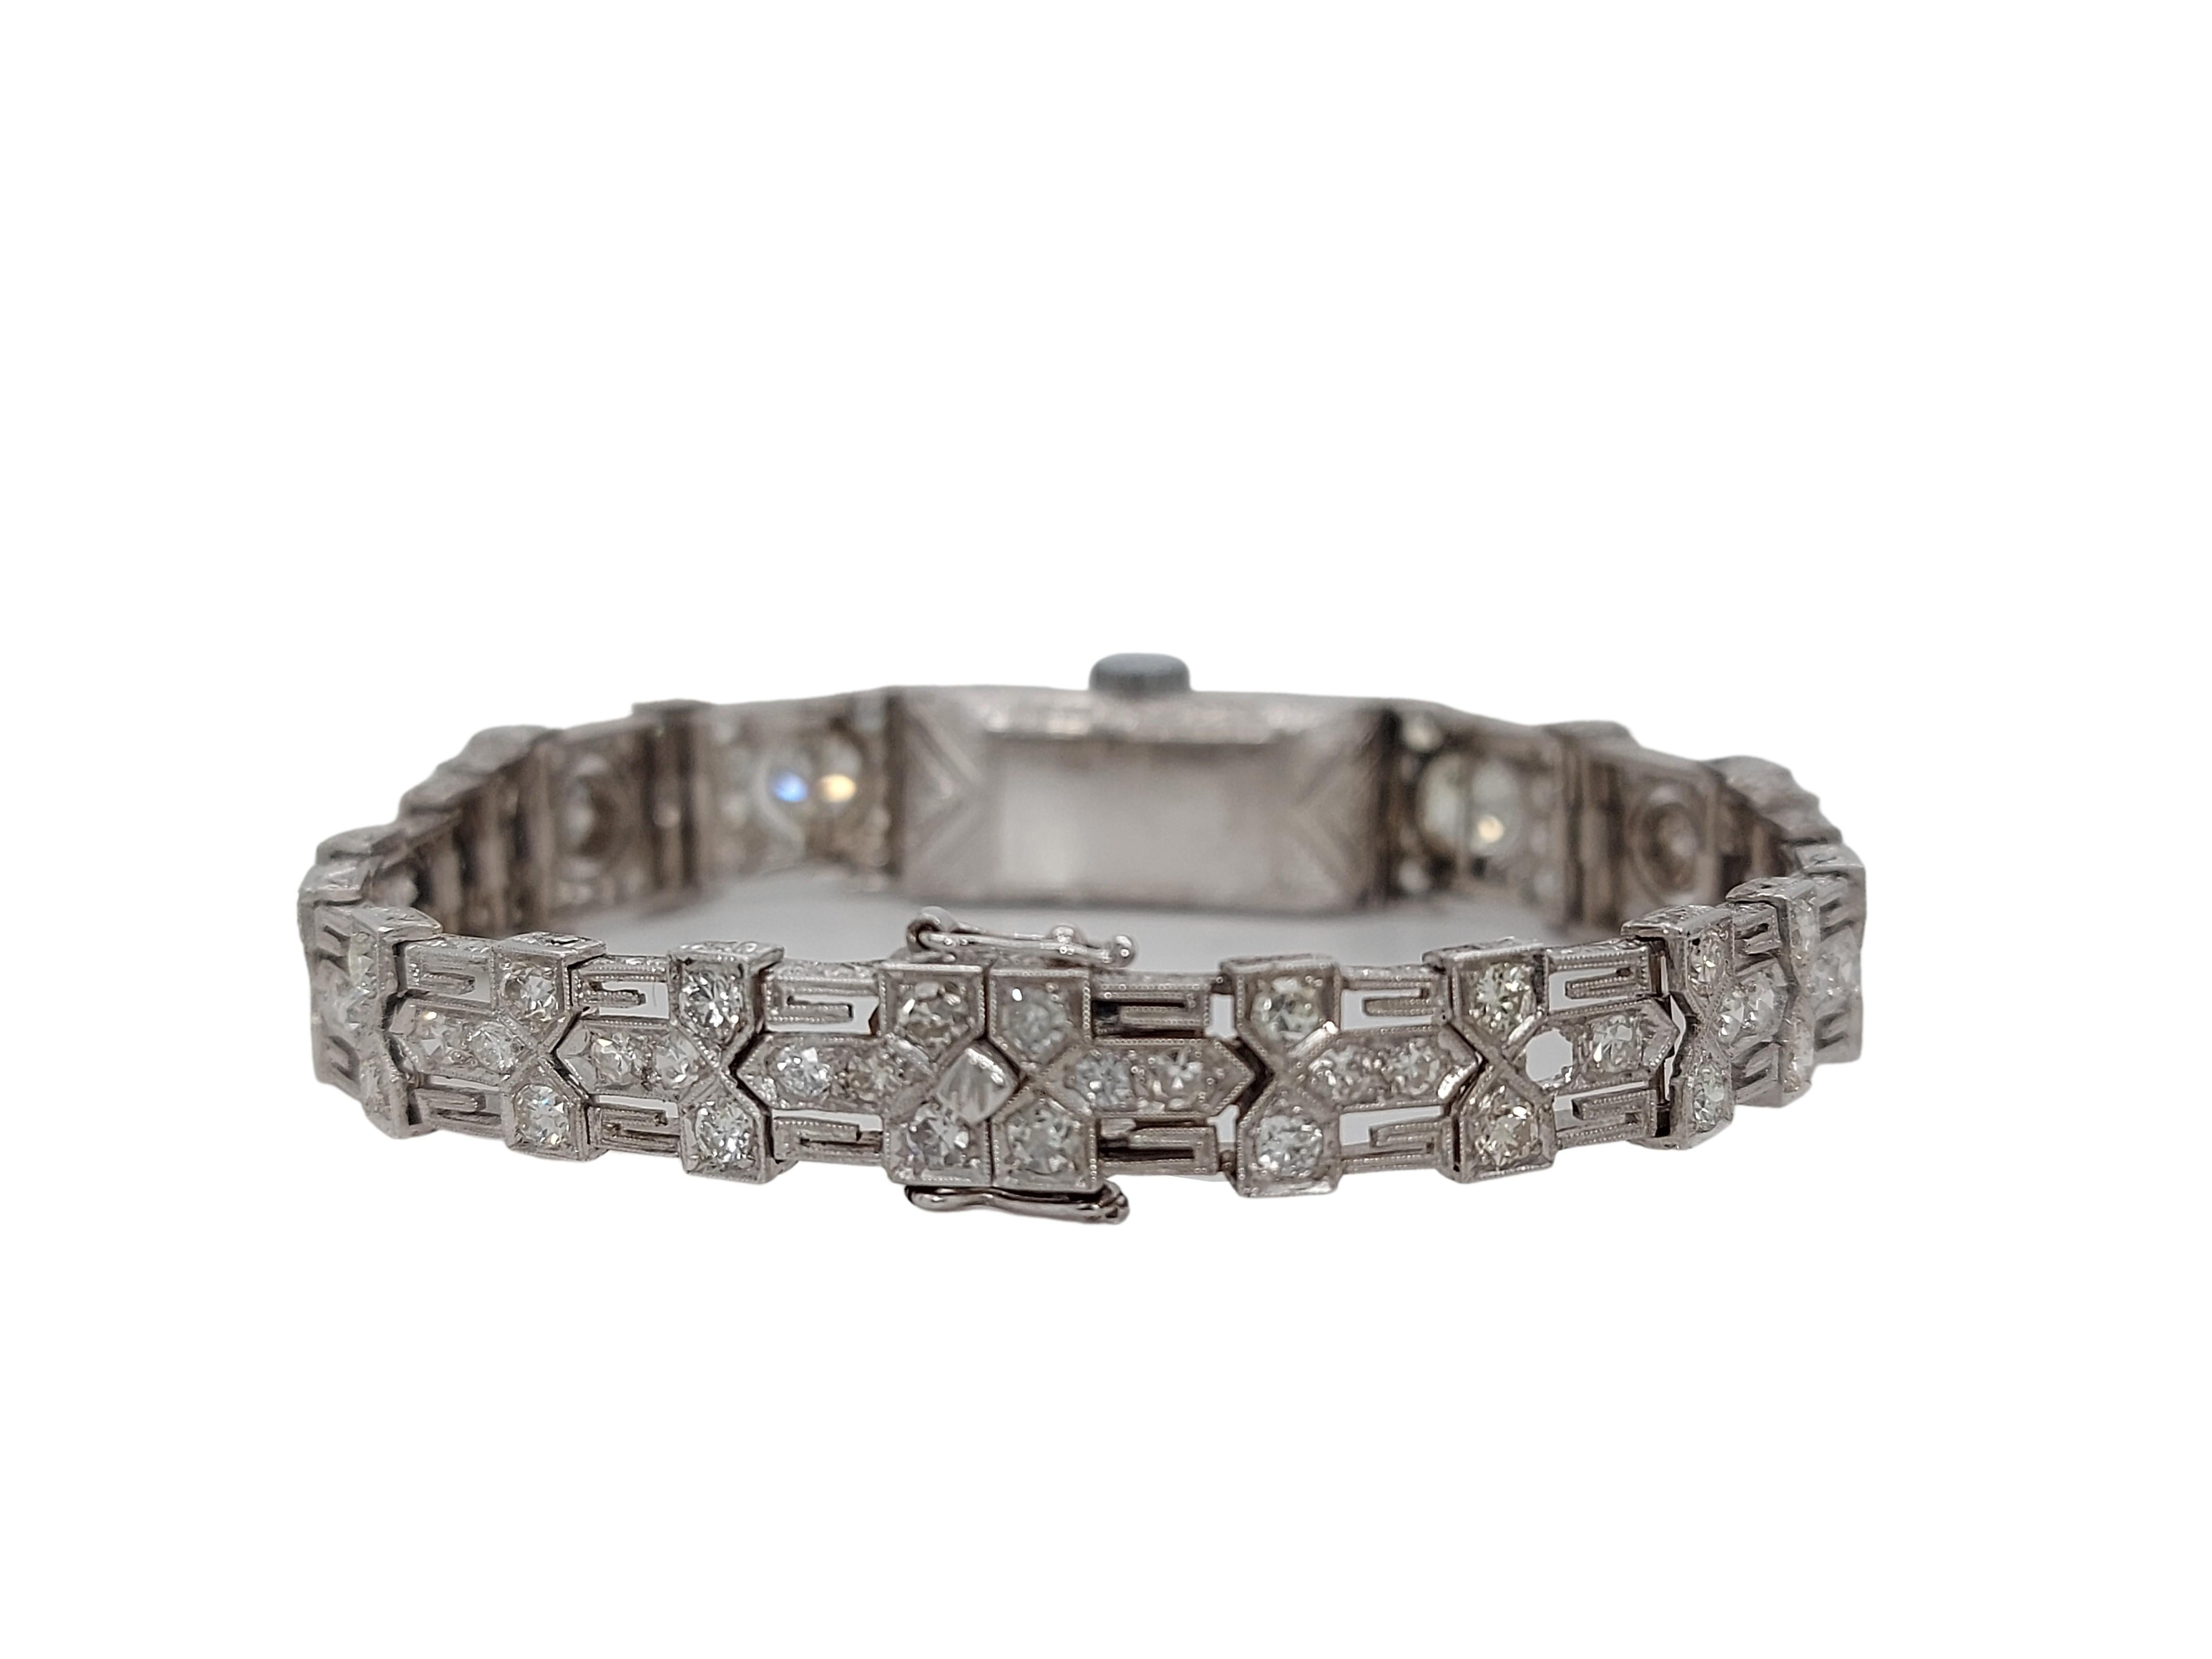 Beautiful Platinum Diamond Bracelet Dress Watch with Big Diamonds For Sale 3